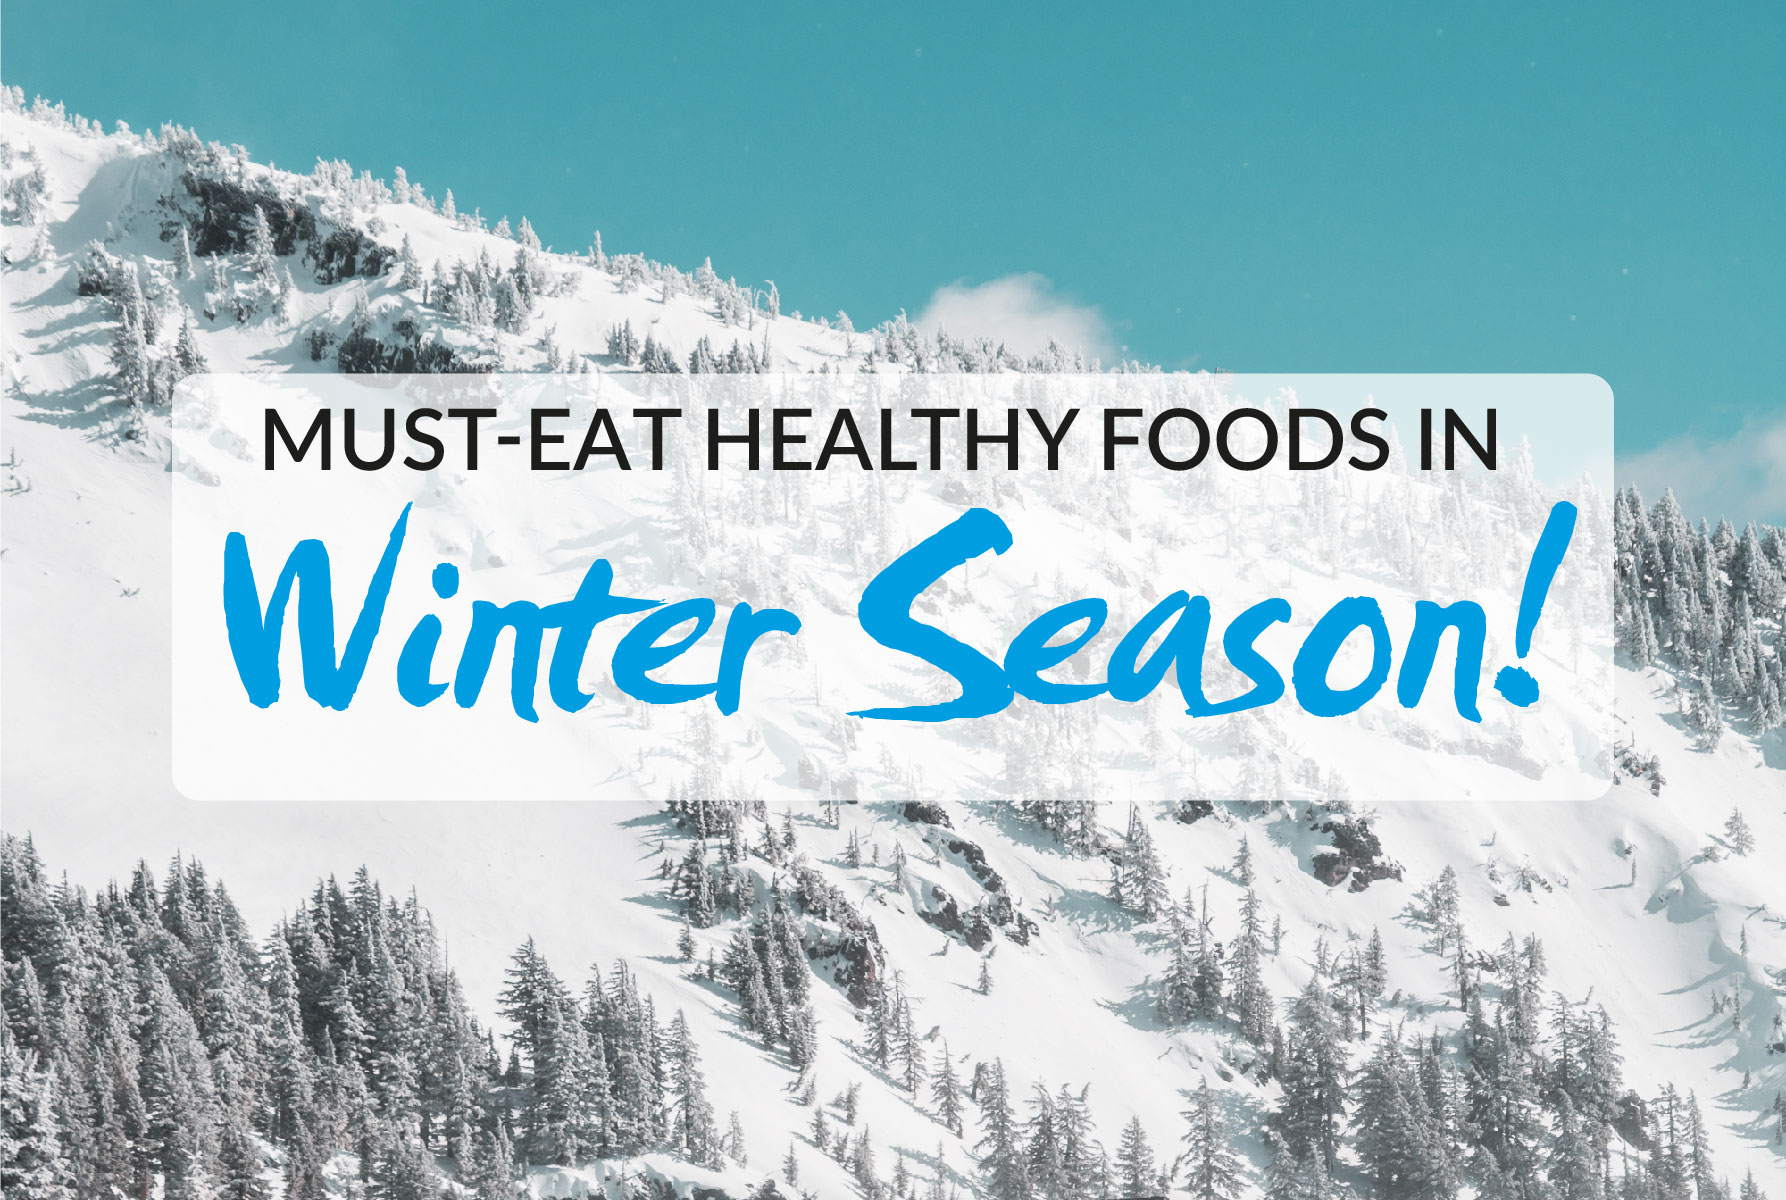 healthy foods for winter season!